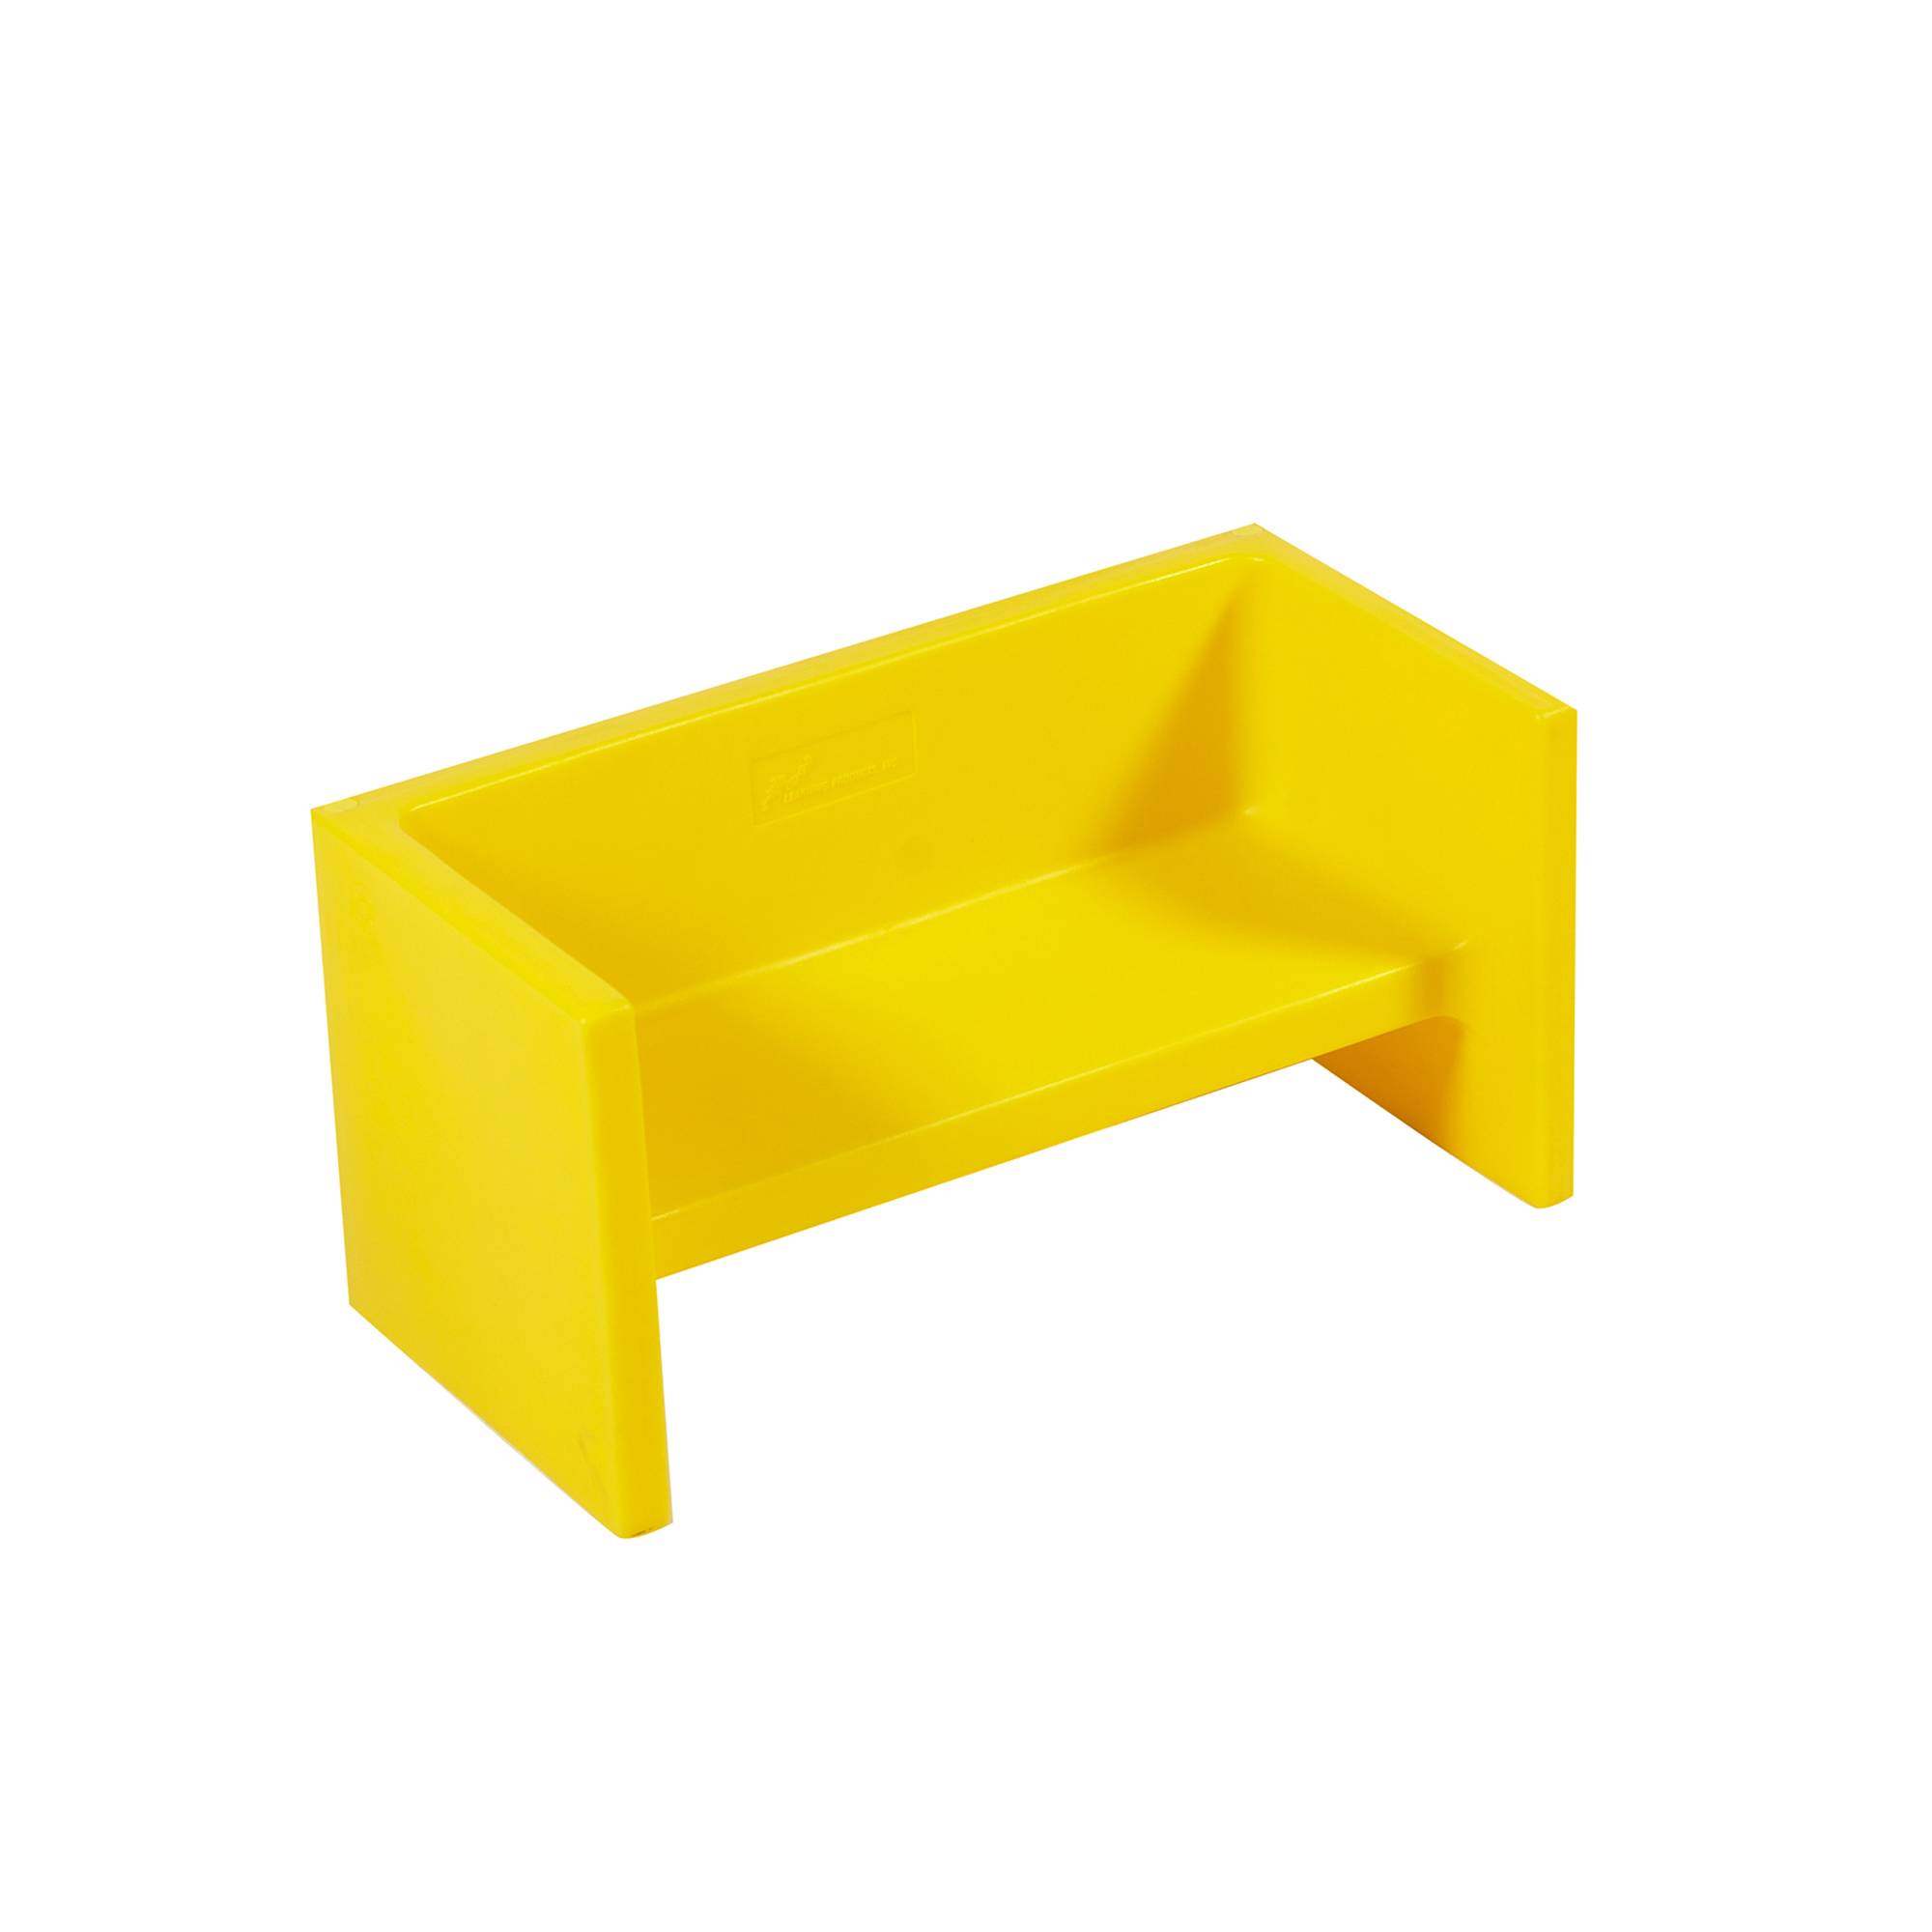 Adapta-Bench® - Yellow